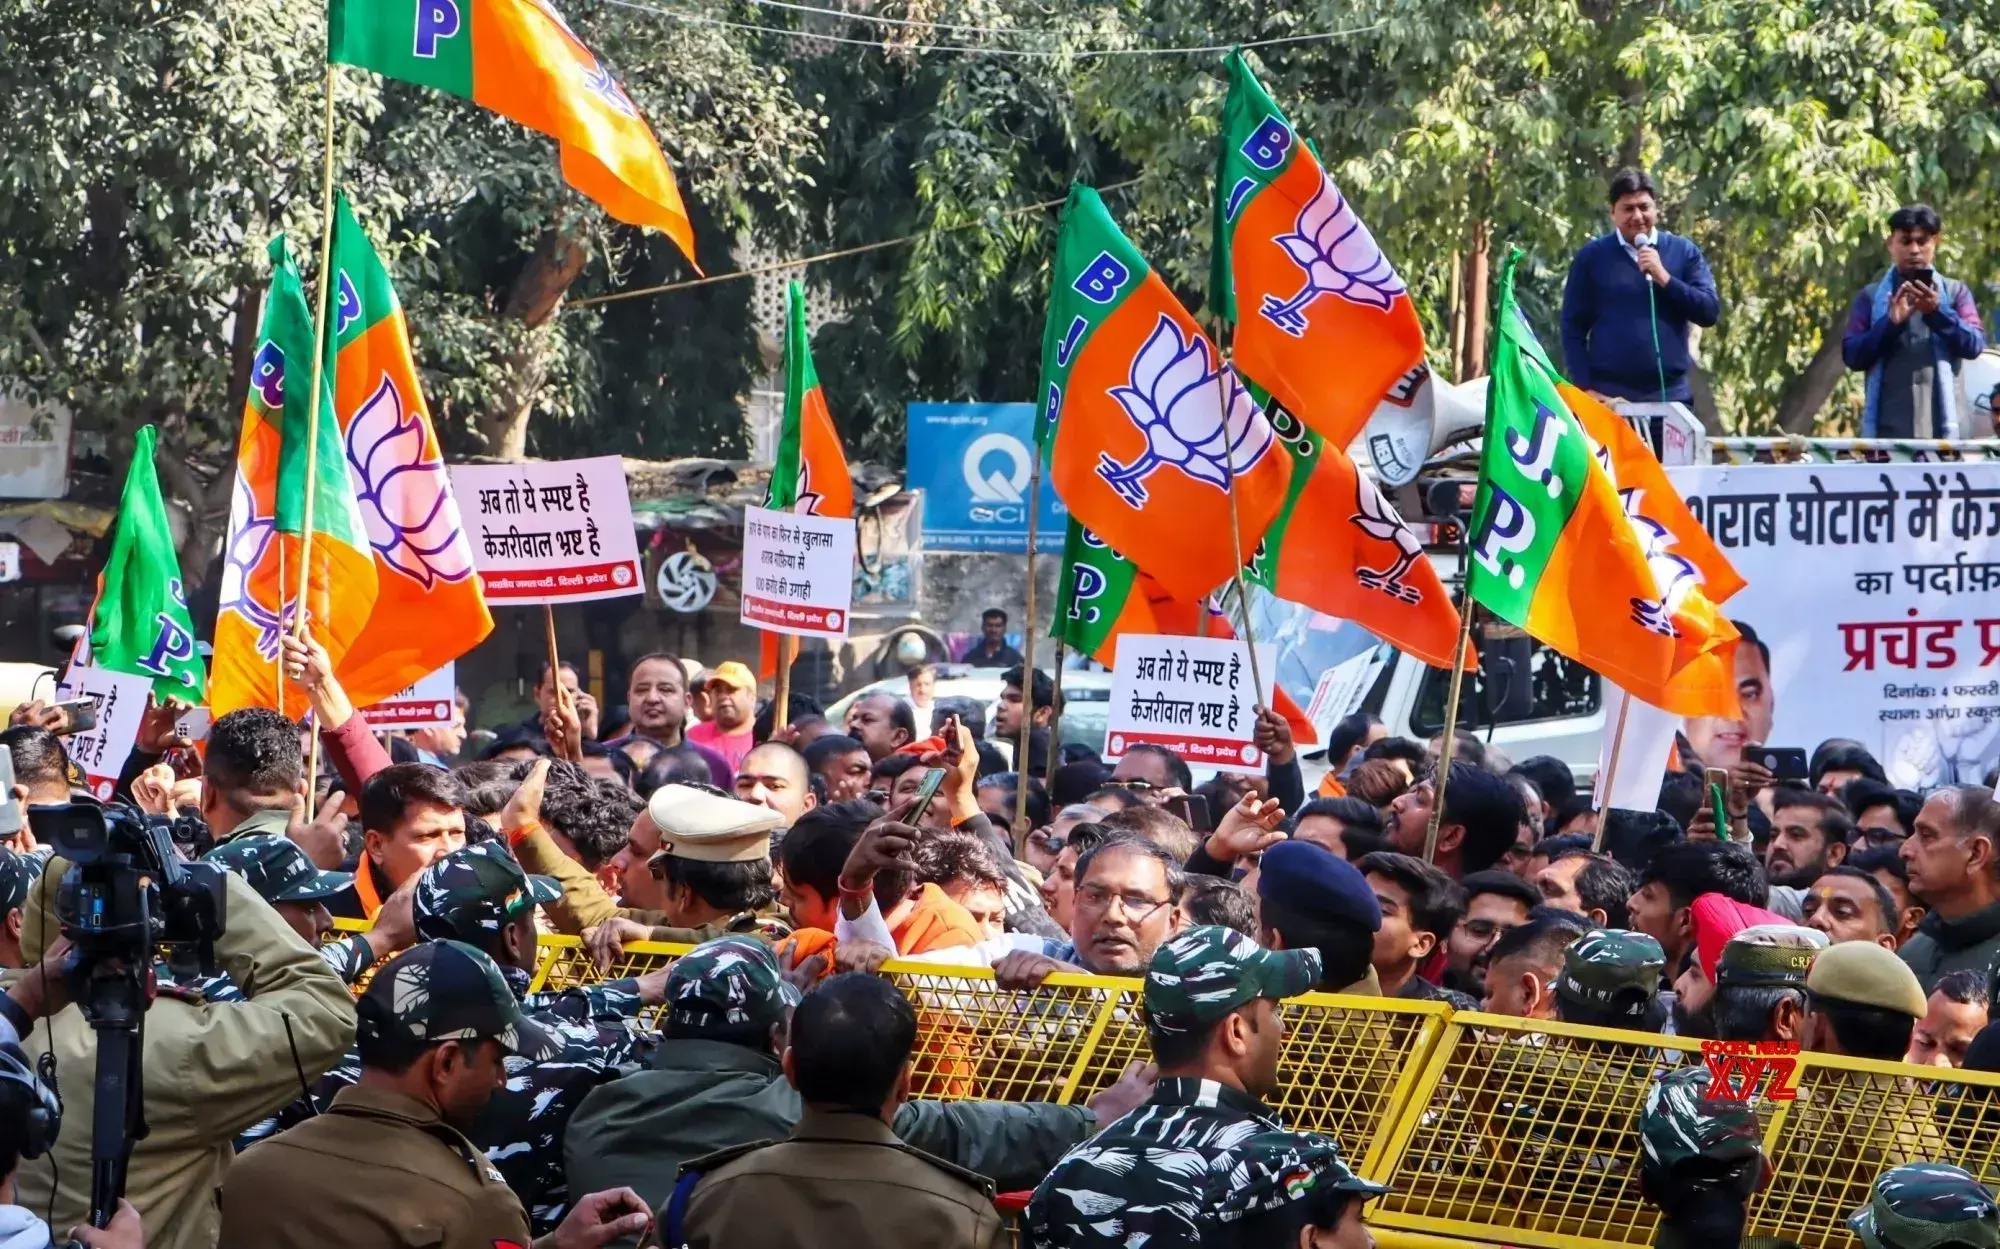 Delhi excise scam case: BJP stages protest at AAP office, demands CM Kejriwal resign